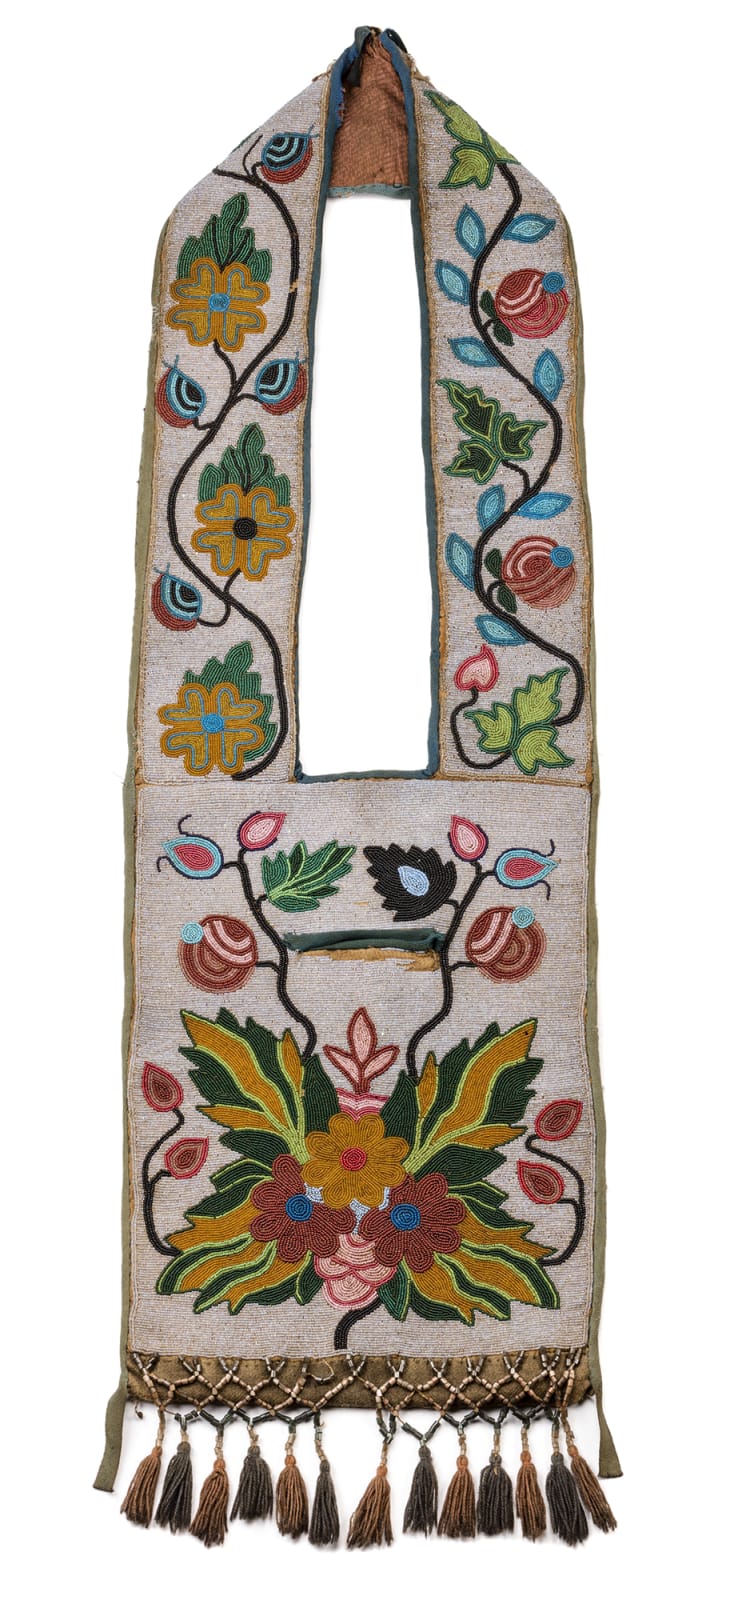 UNIDENTIFIED ANISHINAABE (OJIBWE) ARTIST Beaded Bandolier Bag (Gashkibidaagan),, c. 1890-1910 cloth, glass beads, wool tassels, and cotton thread, 45 x 13 x 0.75 in (114.3 x 33 x 1.9 cm)